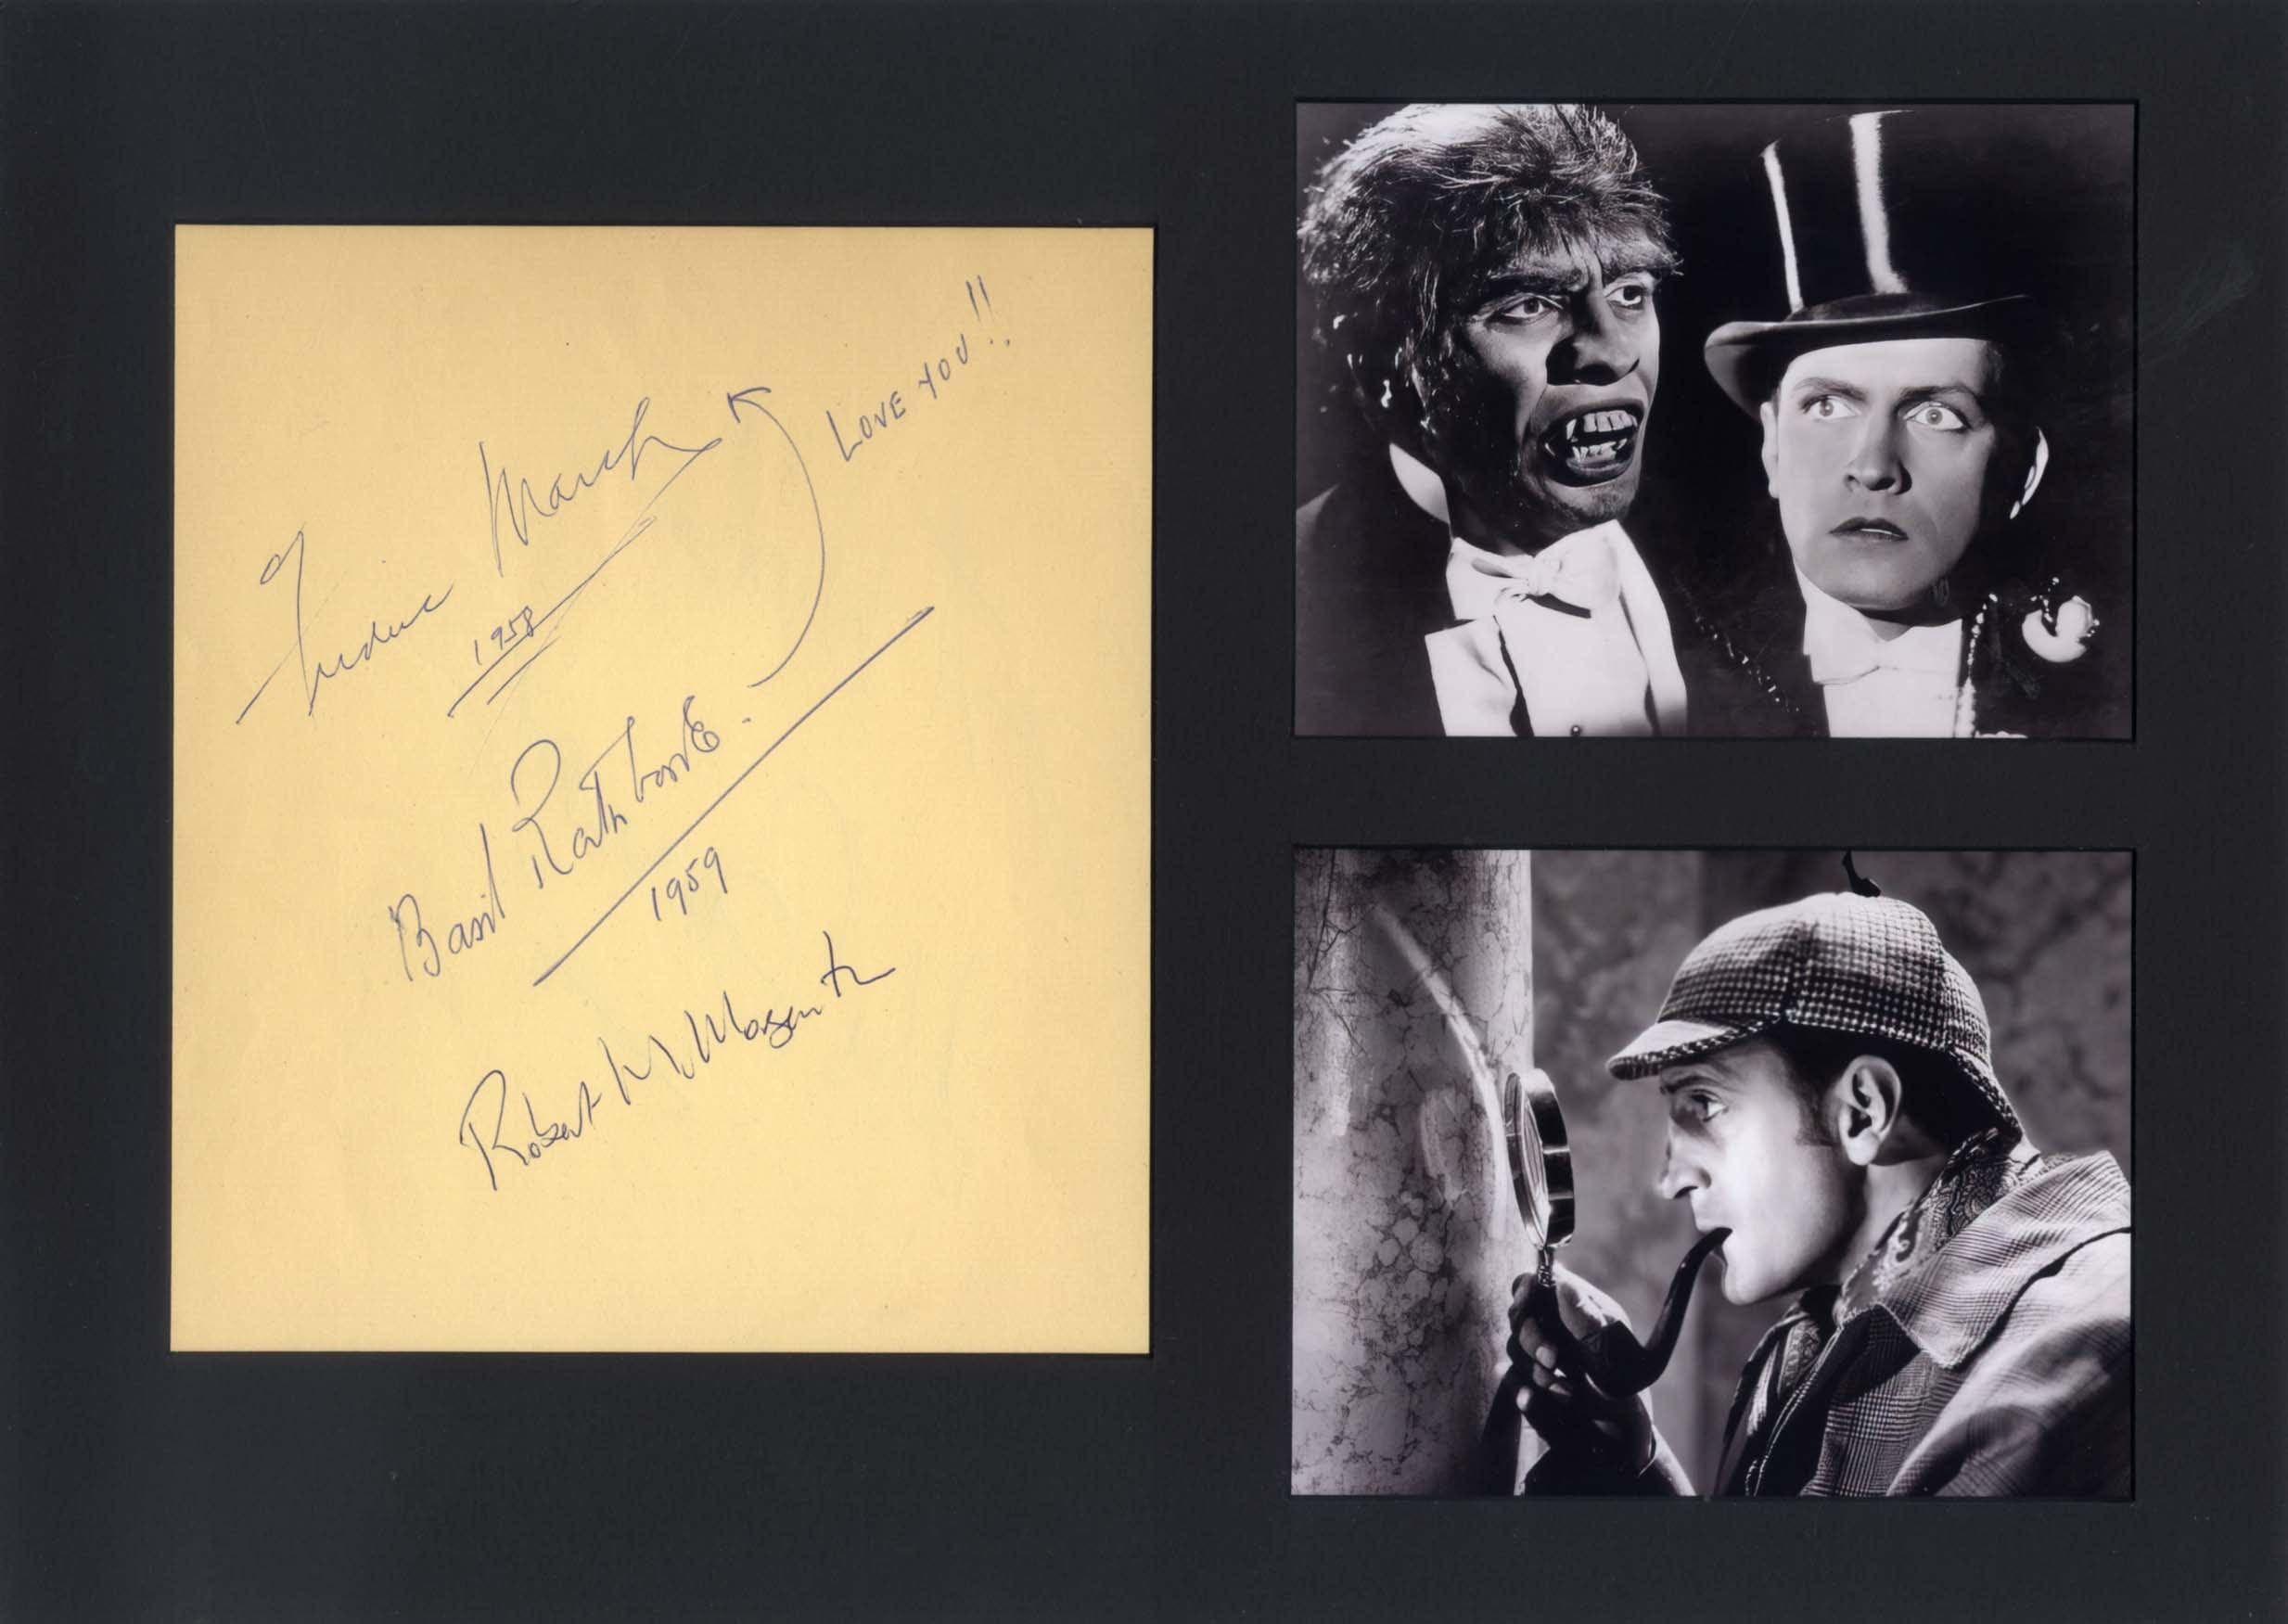 Basil &amp; Fredric Rathbone &amp; March Autograph Autogramm | ID 8205231718549